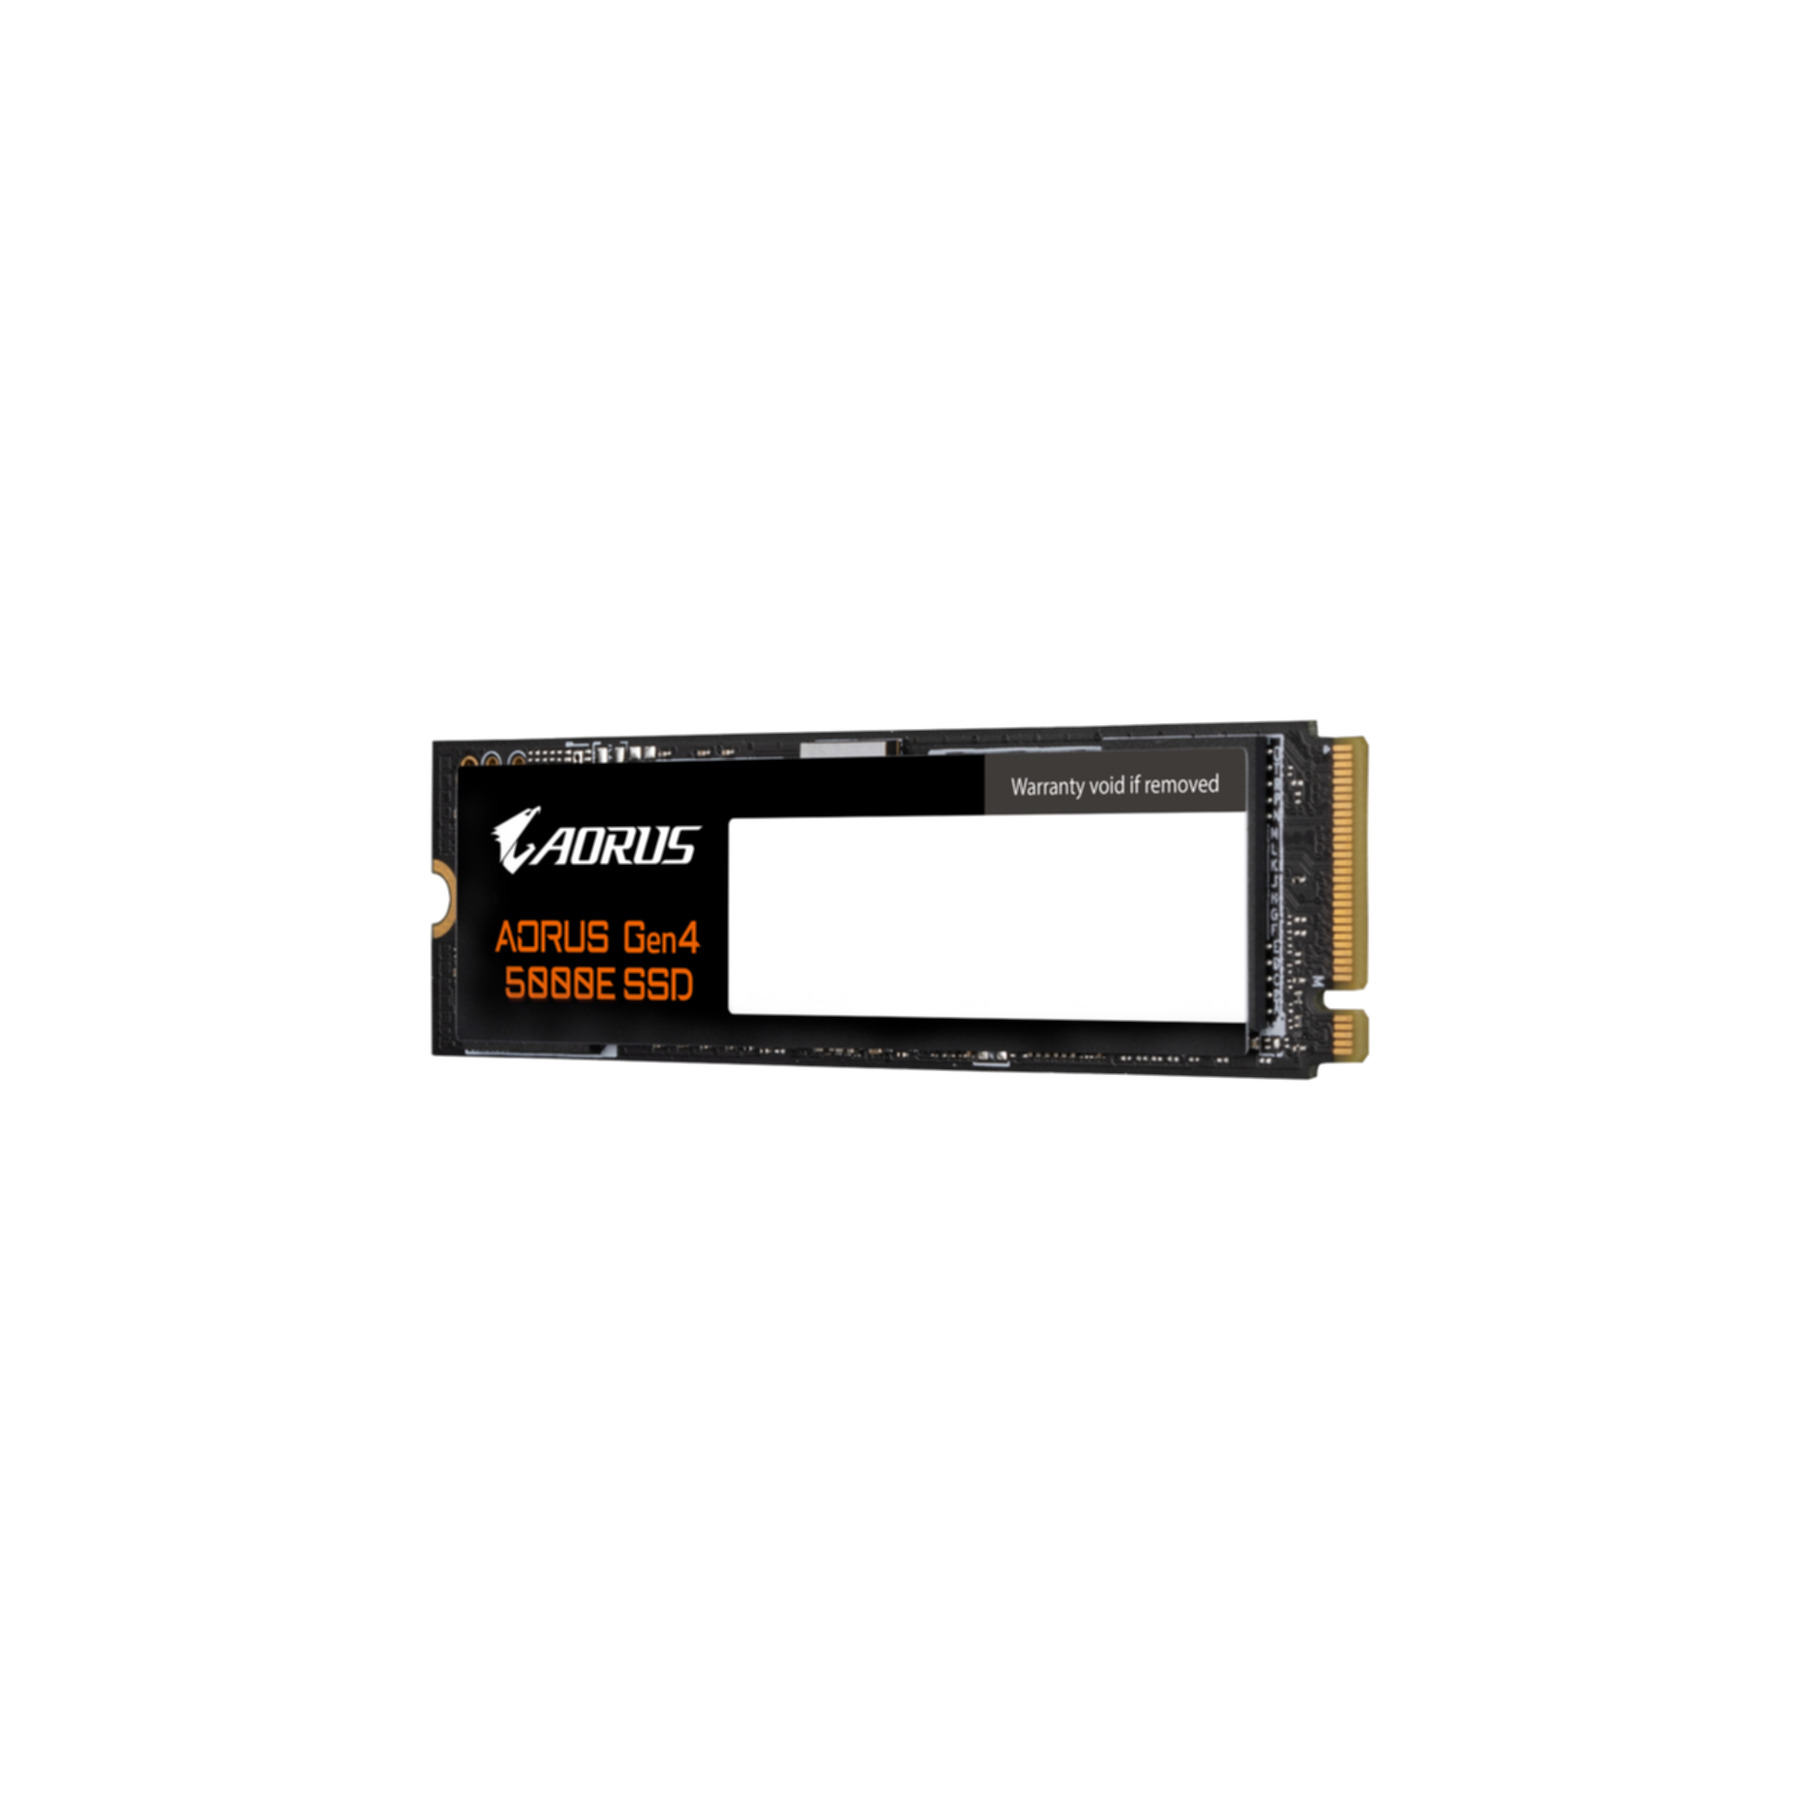 GIGABYTE AORUS Gen4 5000E, intern GB, SSD, 2,5 500 Zoll